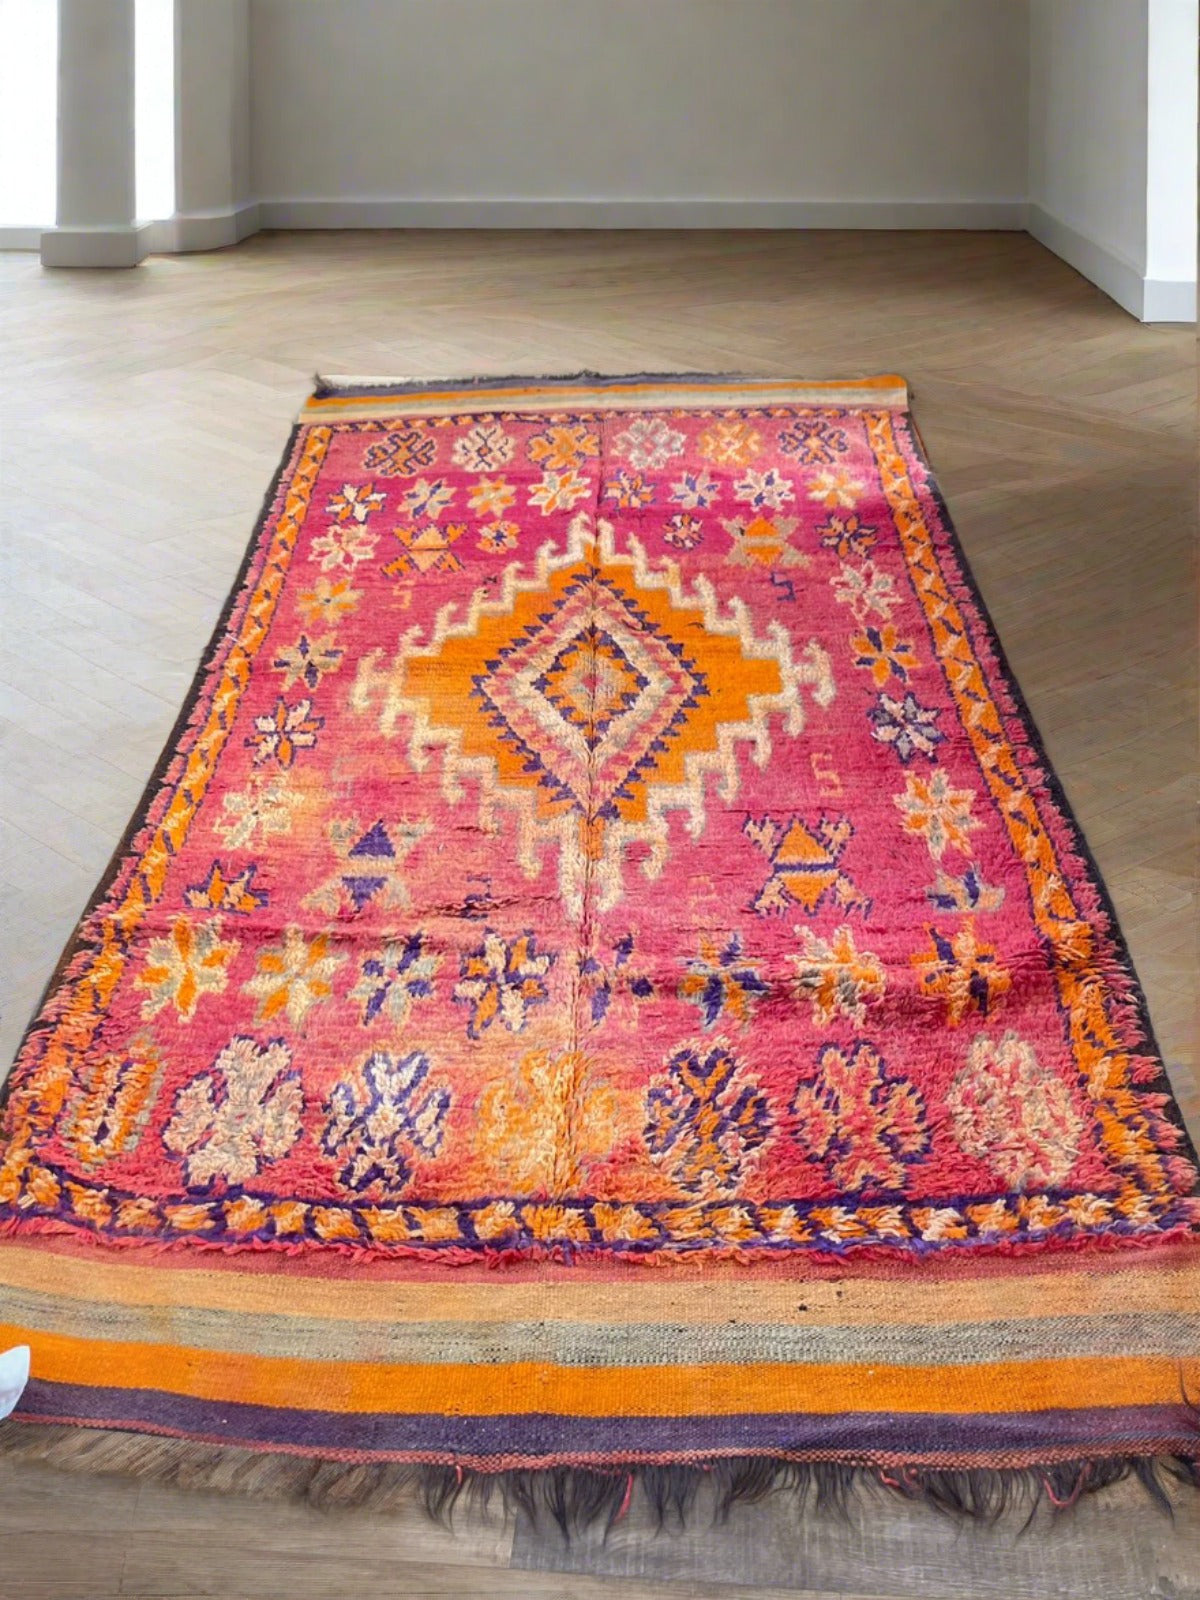 Warm vibrant red vintage Moroccan rug with orange and purple symbols